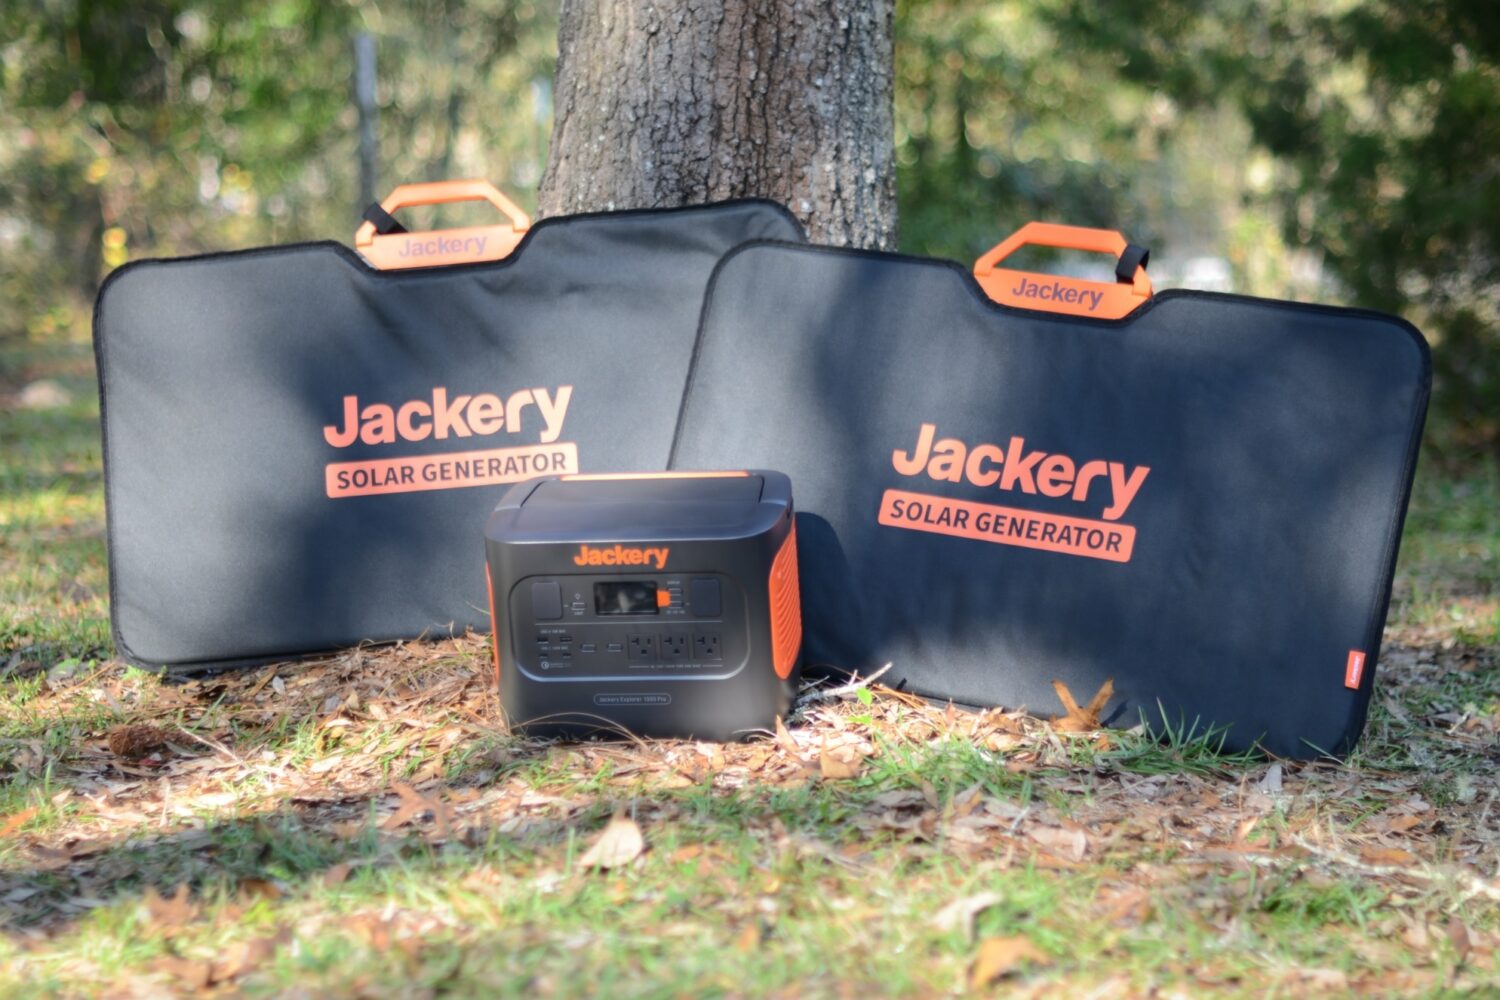 Jackery Solar Generator 1000 Pro with two 80W SolarSaga solar panels.